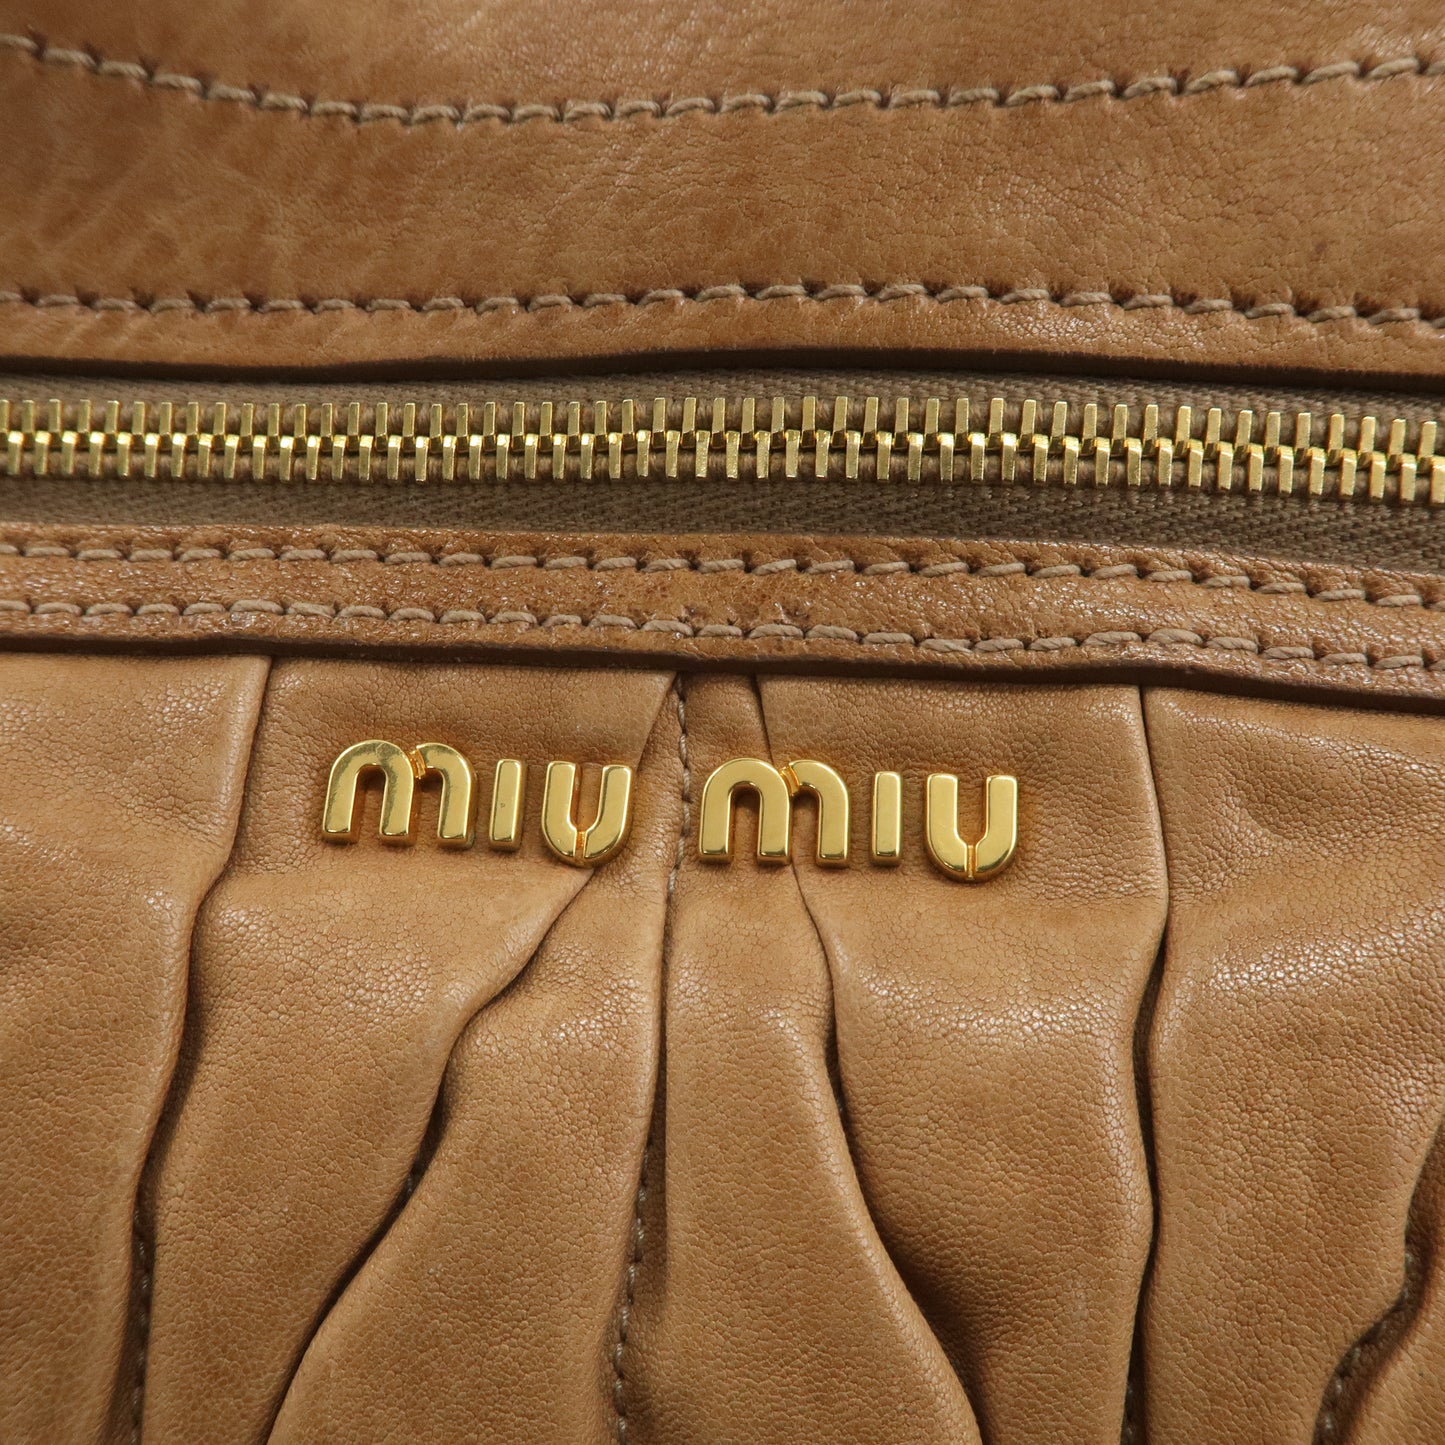 MIU MIU Leather 2Way Shoulder Bag Hand Bag Brown